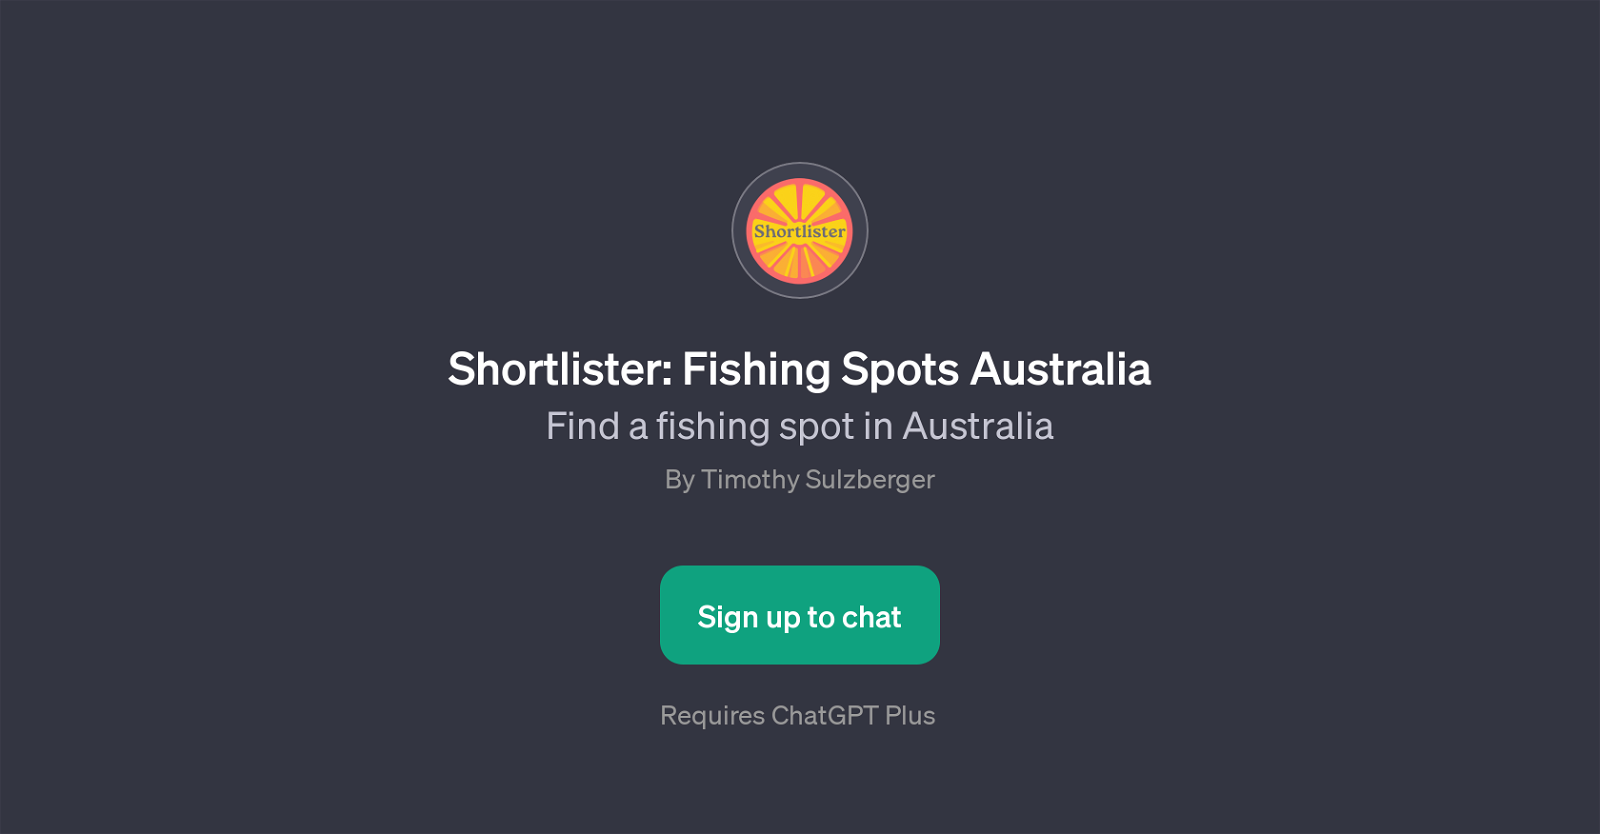 Shortlister: Fishing Spots Australia - Fishing spot recommendations - TAAFT